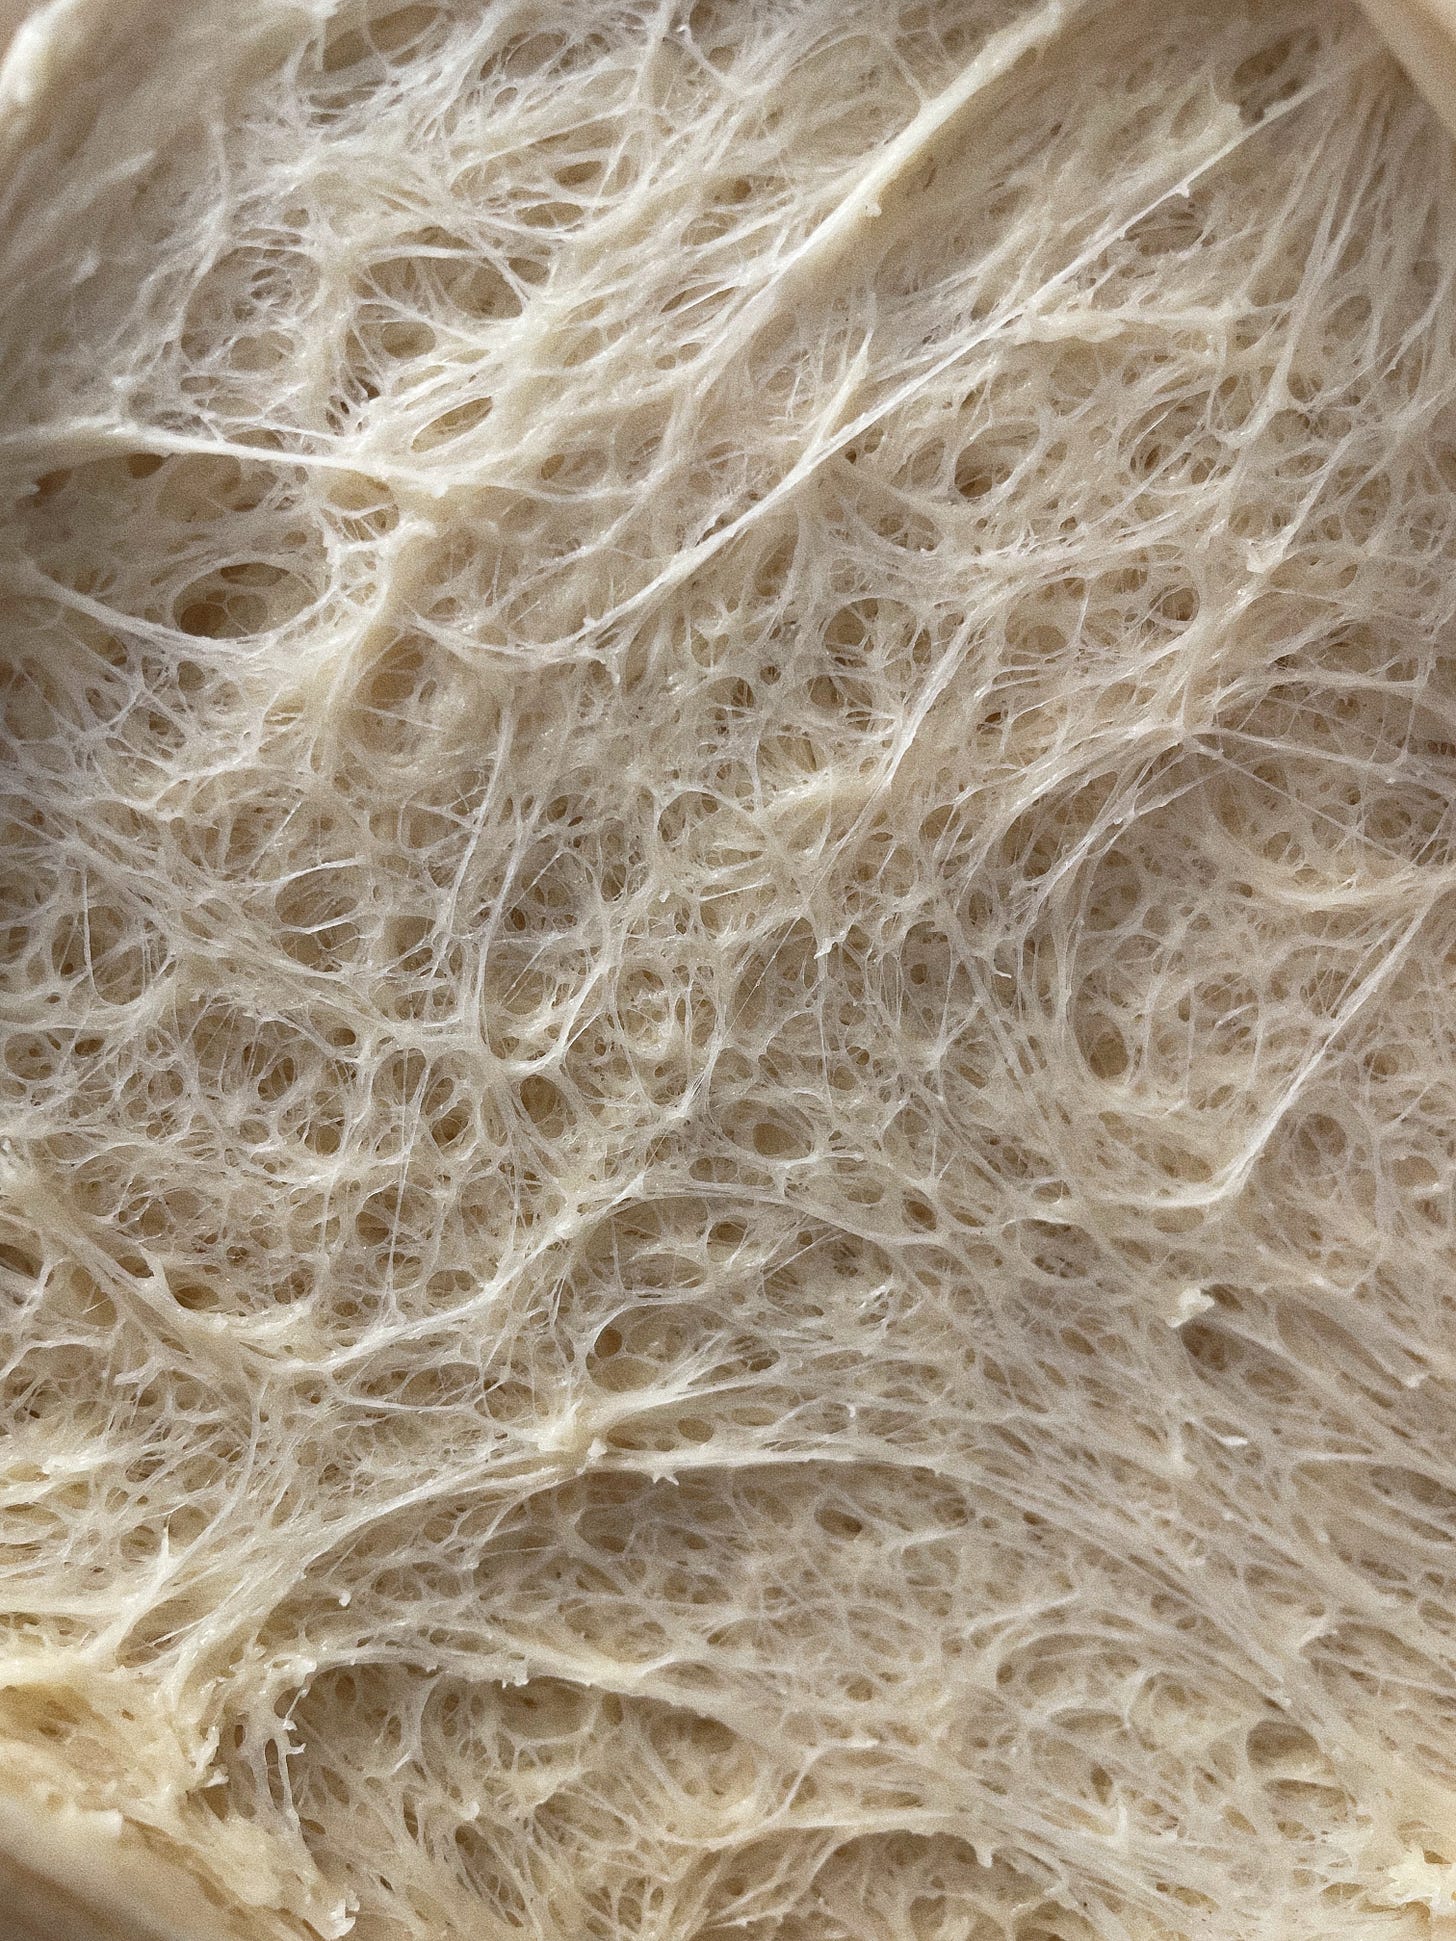 Image of interior gluten development of unbaked dough.